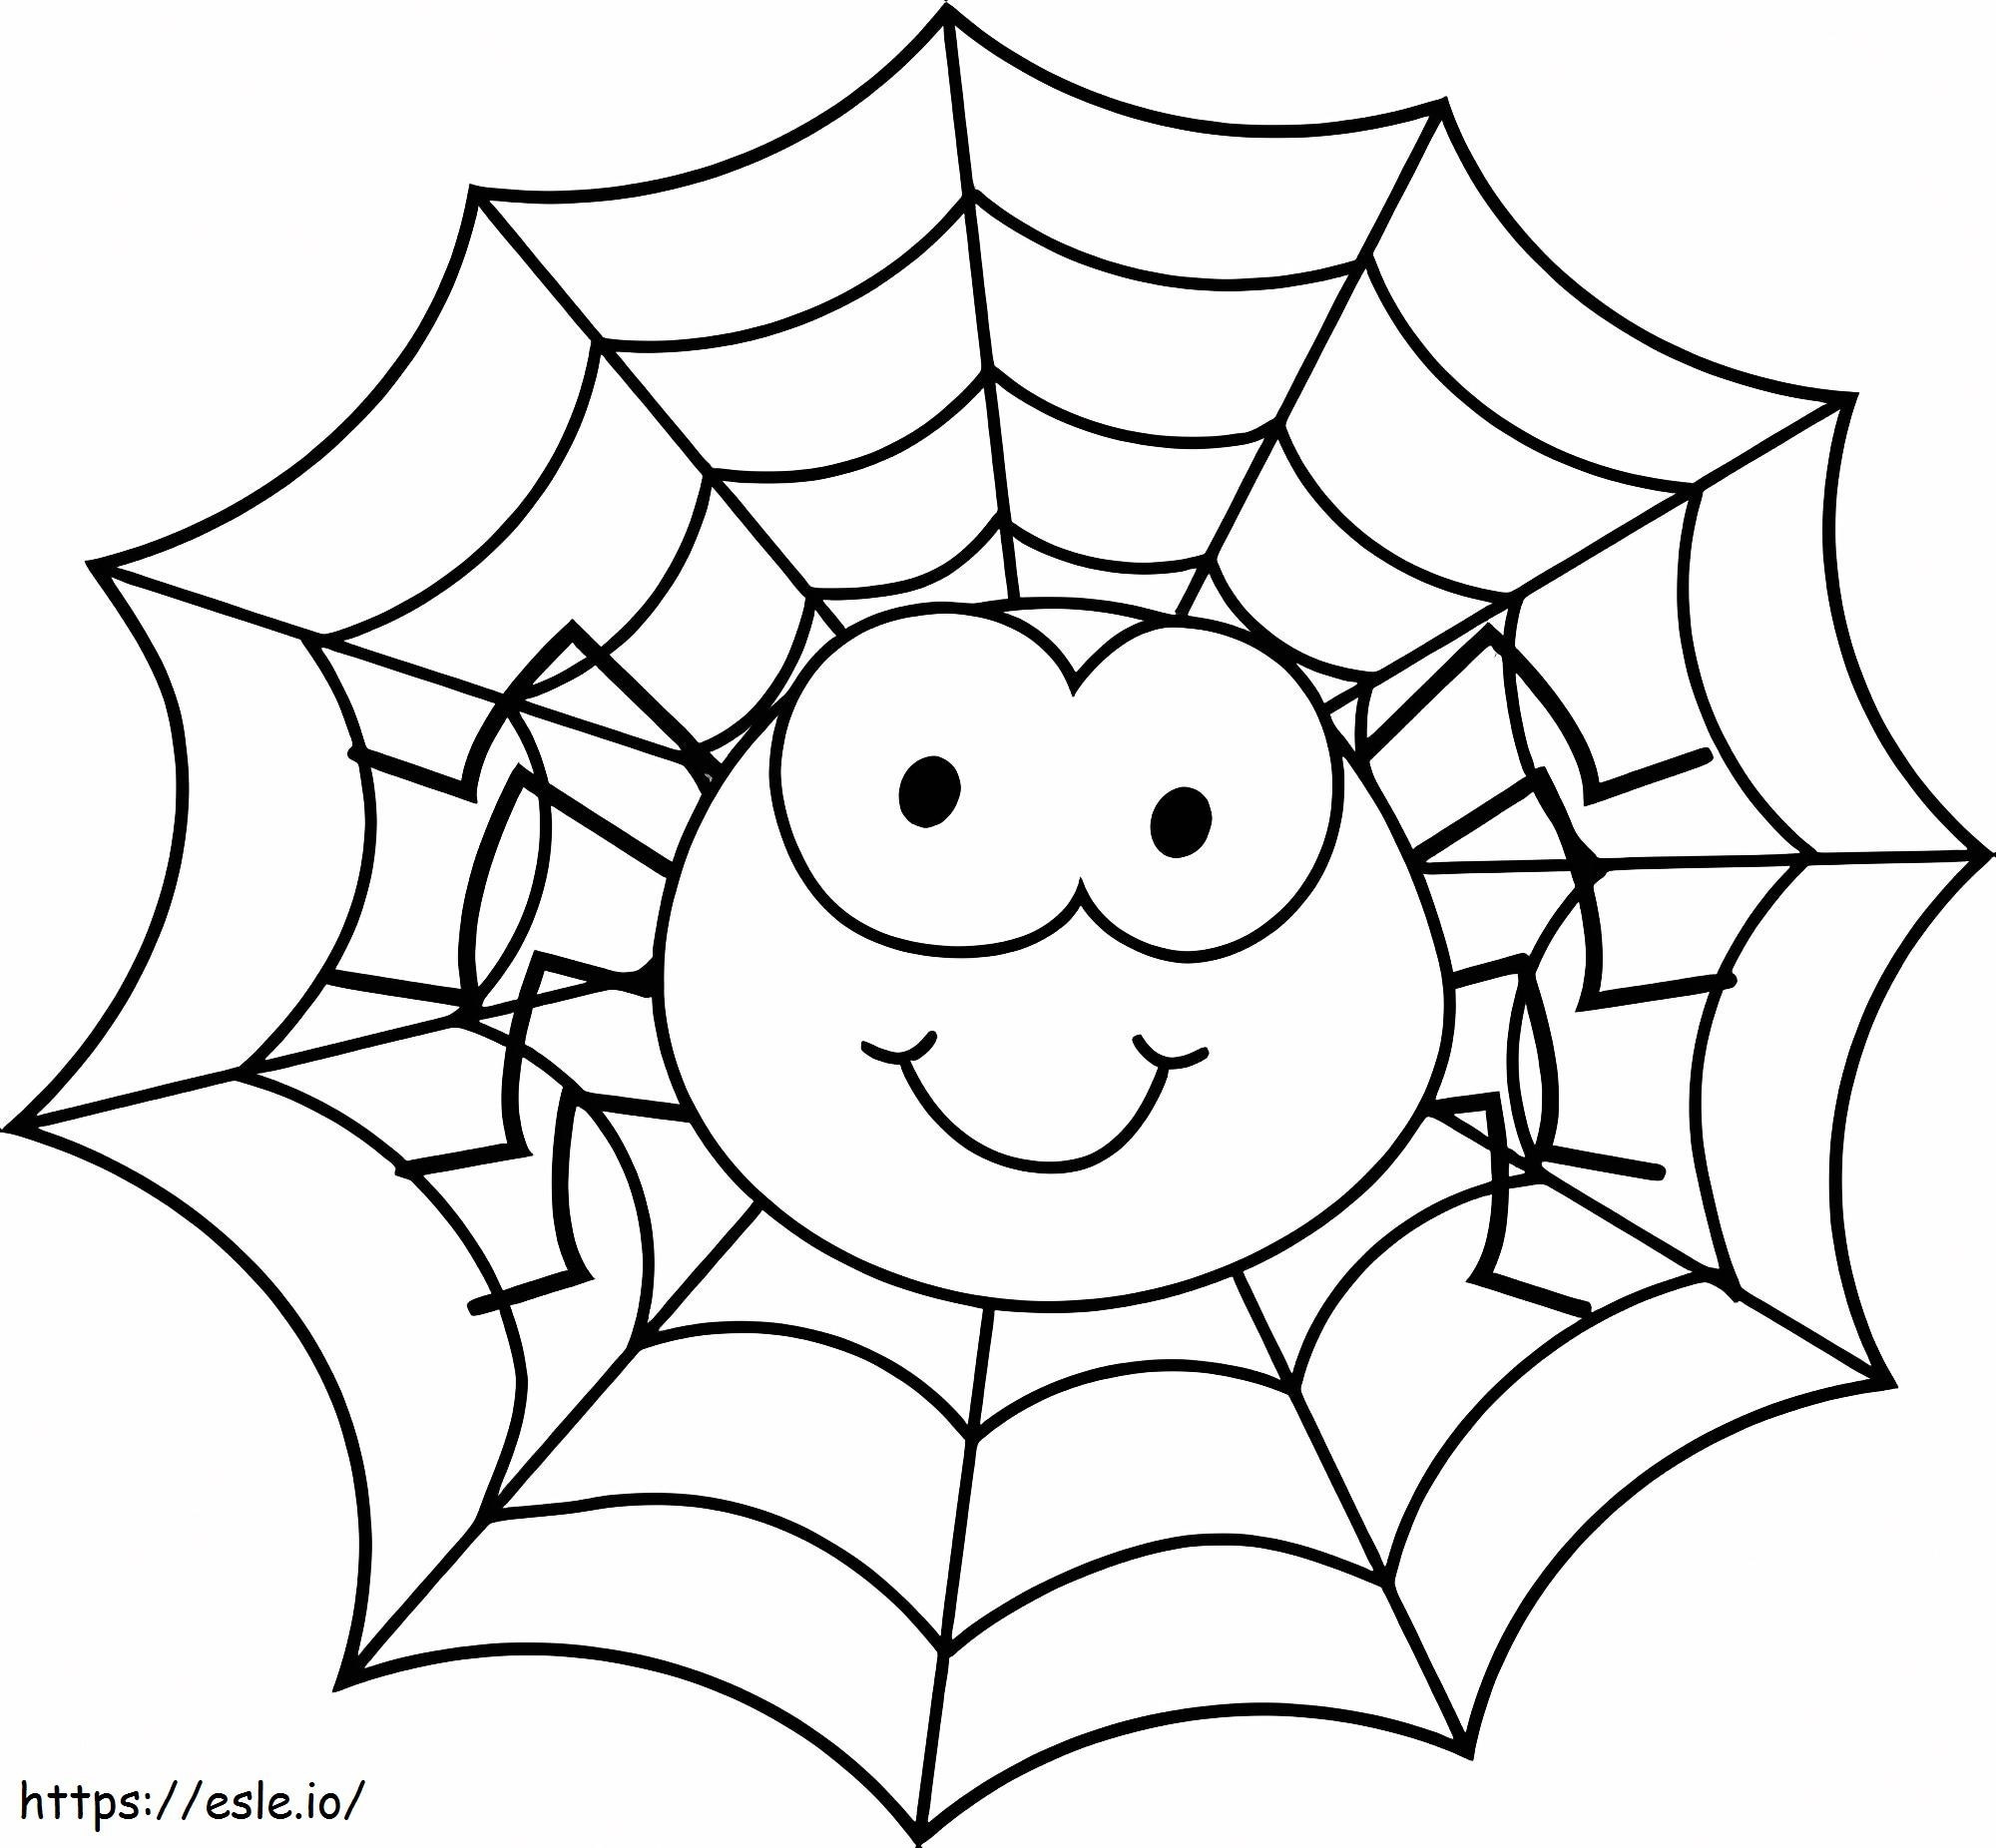 Cute Cartoon Spider coloring page